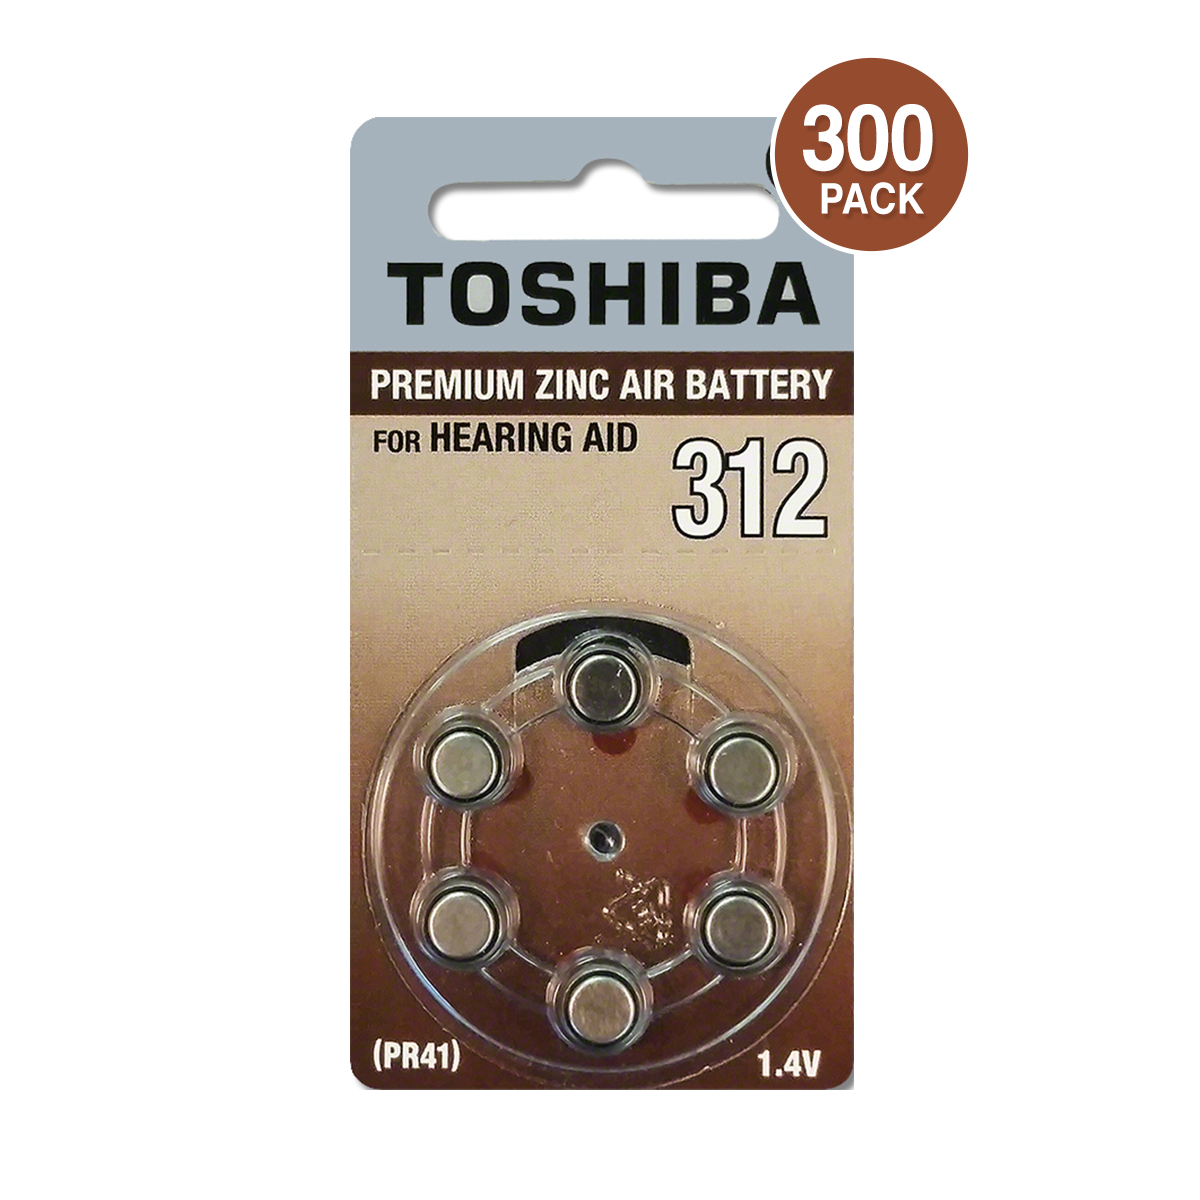 Toshiba Hearing Aid Battery, Size 312 (300 Pc)